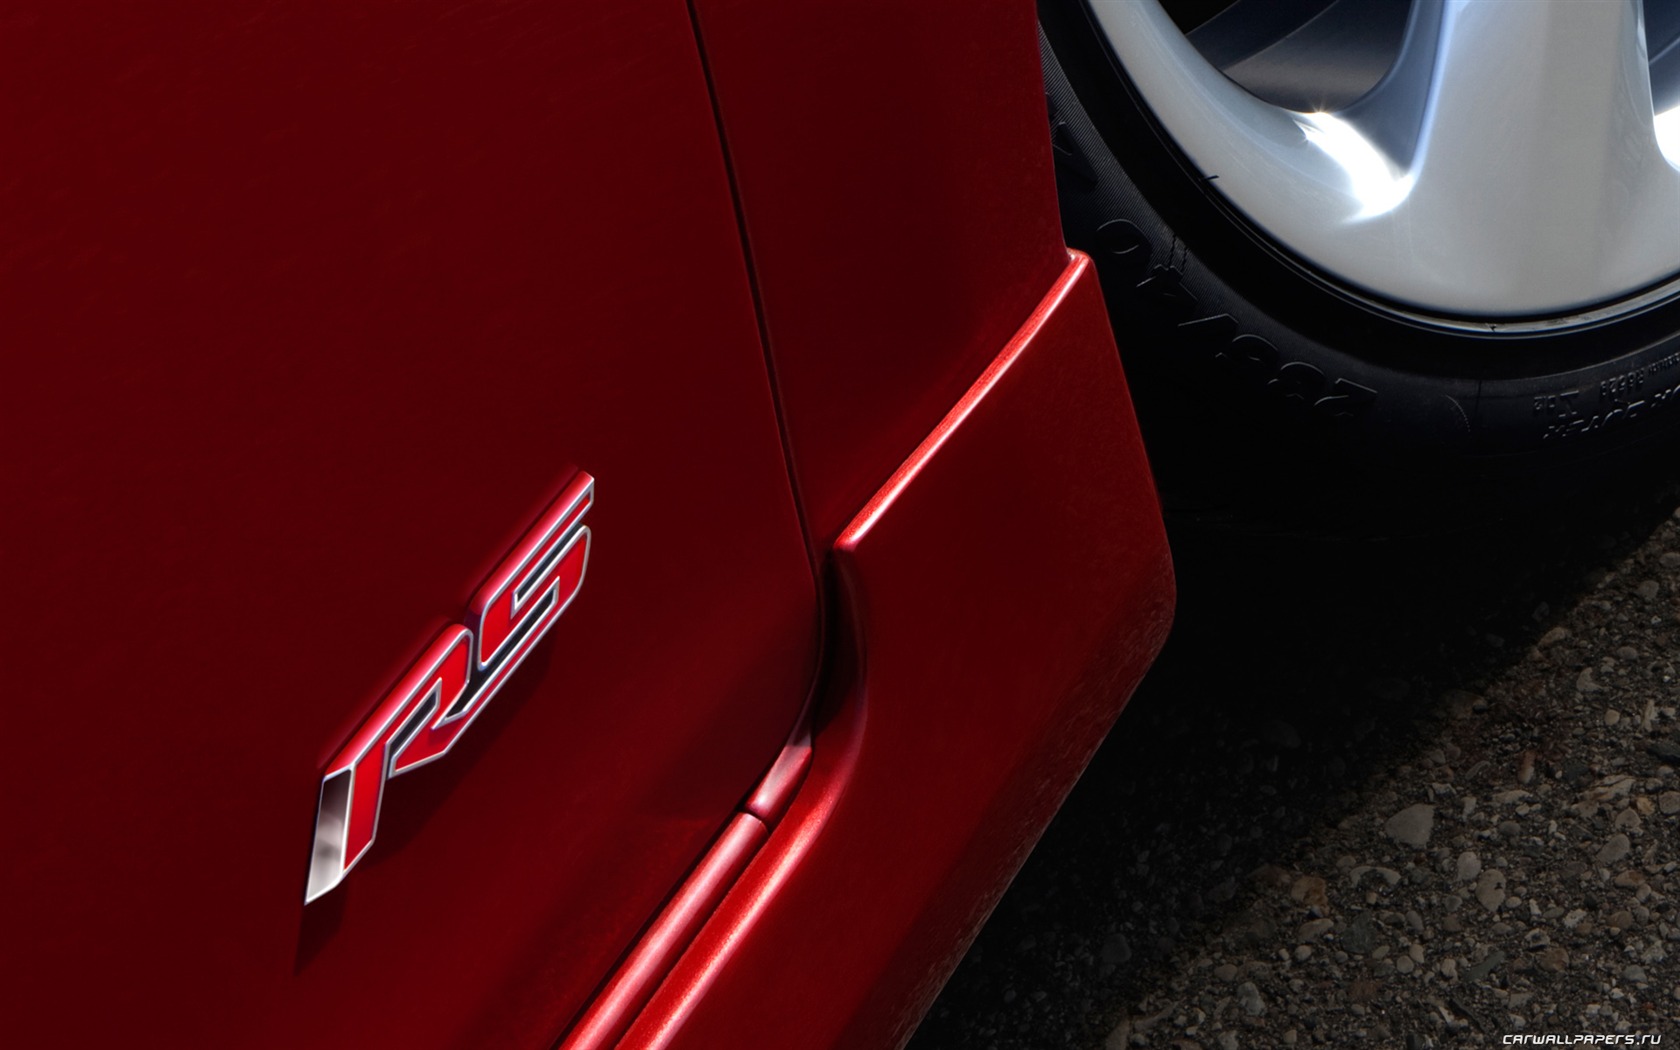 Chevrolet Cruze RS - 2011 雪佛蘭 #9 - 1680x1050